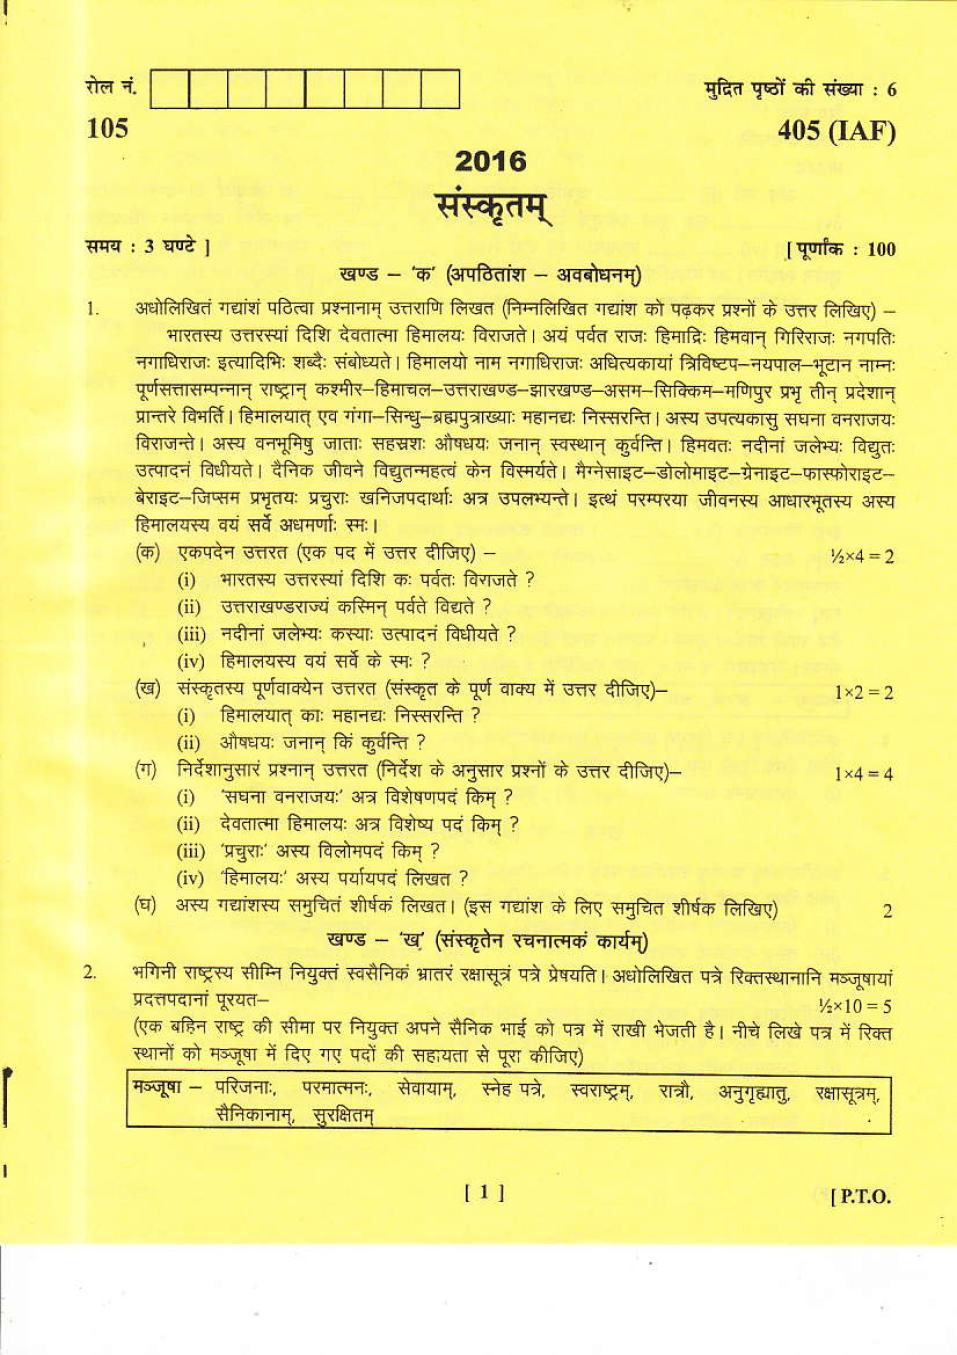 Uttarakhand Board Class 12 Question Paper 2016 for Sanskrit - Page 1